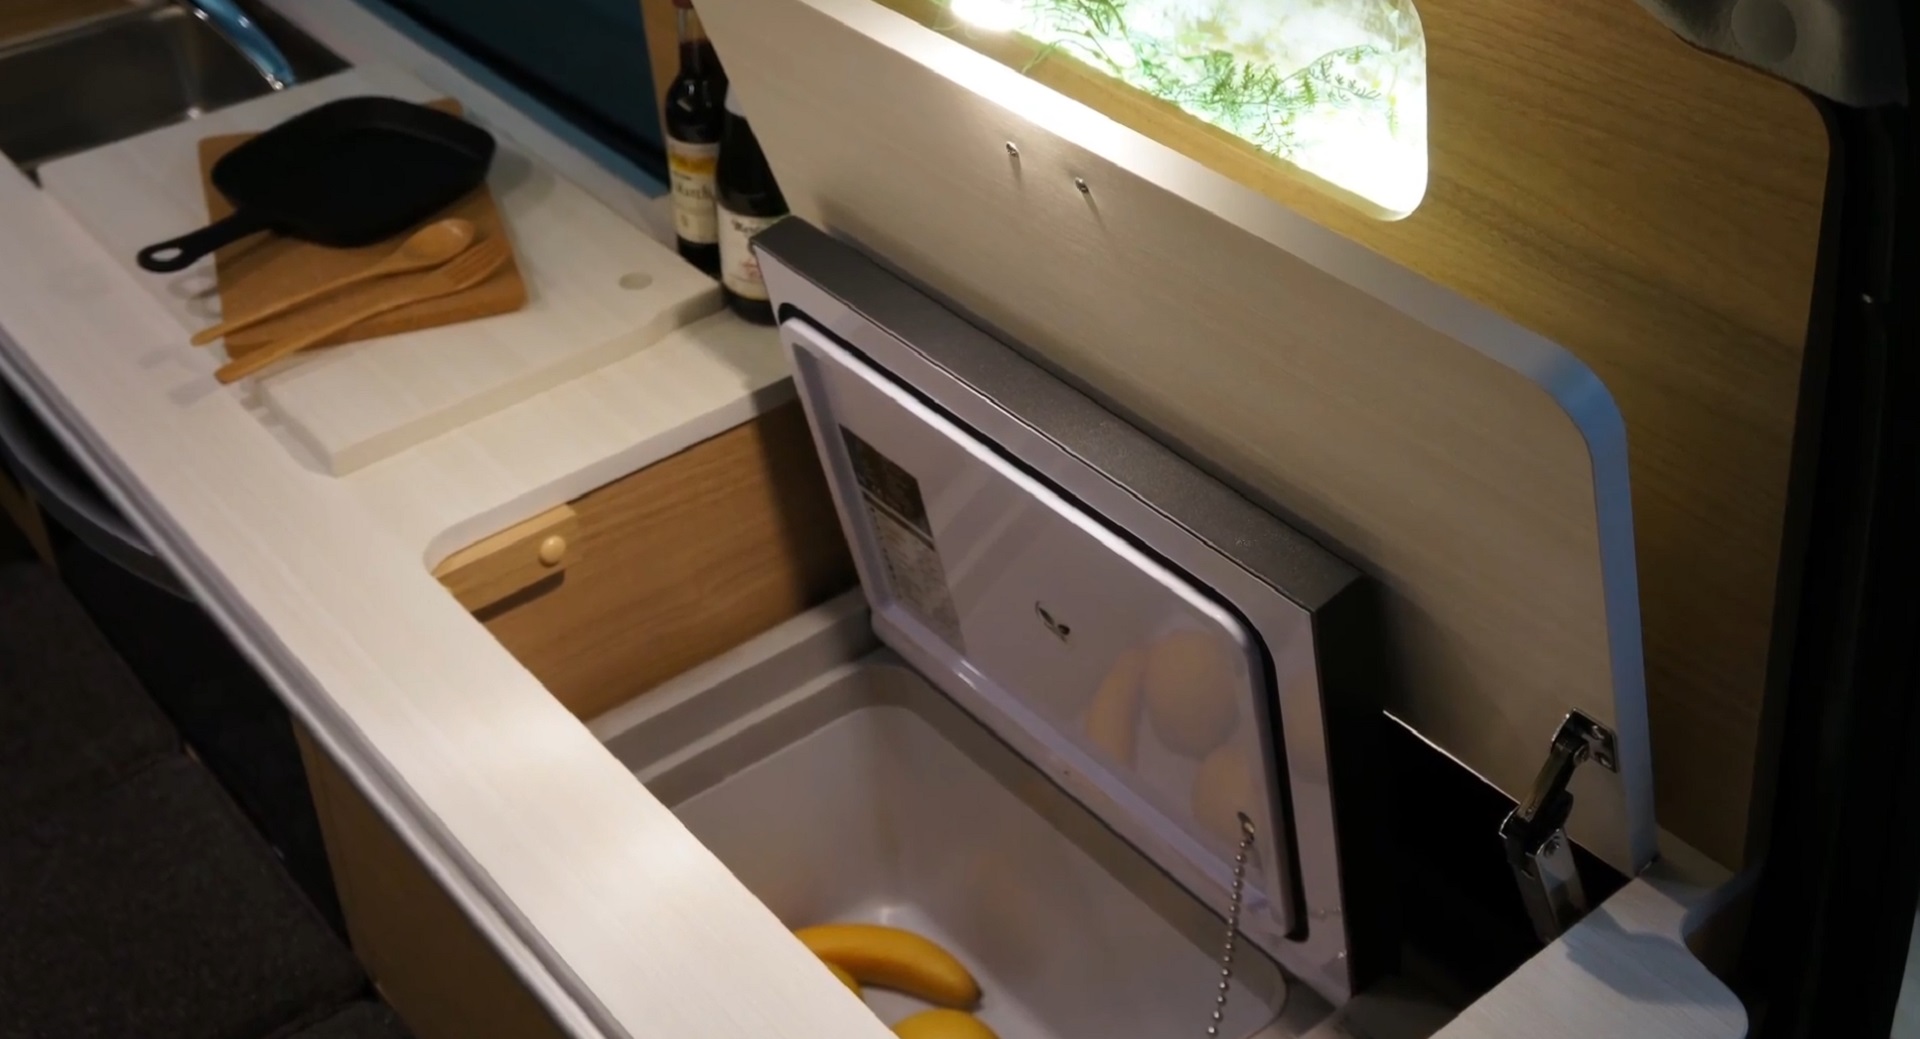 Photo of the little fridge in the Cruise Cozy camper van